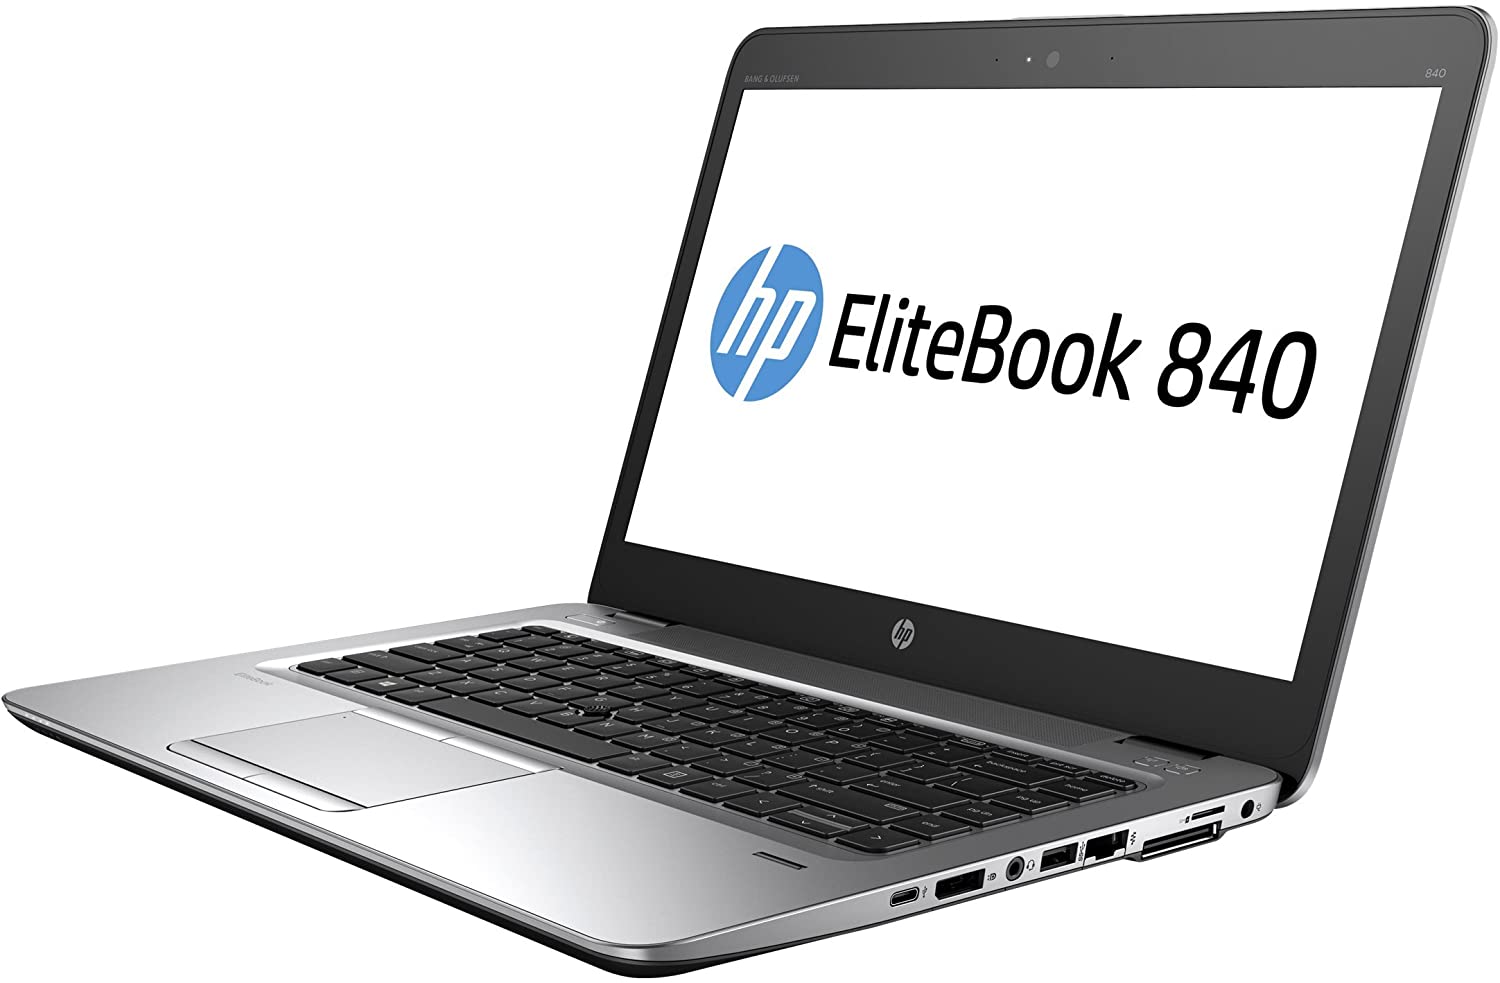 Portátil Ultrabook HP Elitebook 840 G3 GRADO B (Intel Core i5 6200U 2.3Ghz/8GB/240SSD-M.2/14FHD/NO-DVD/W10P) Preinstalado